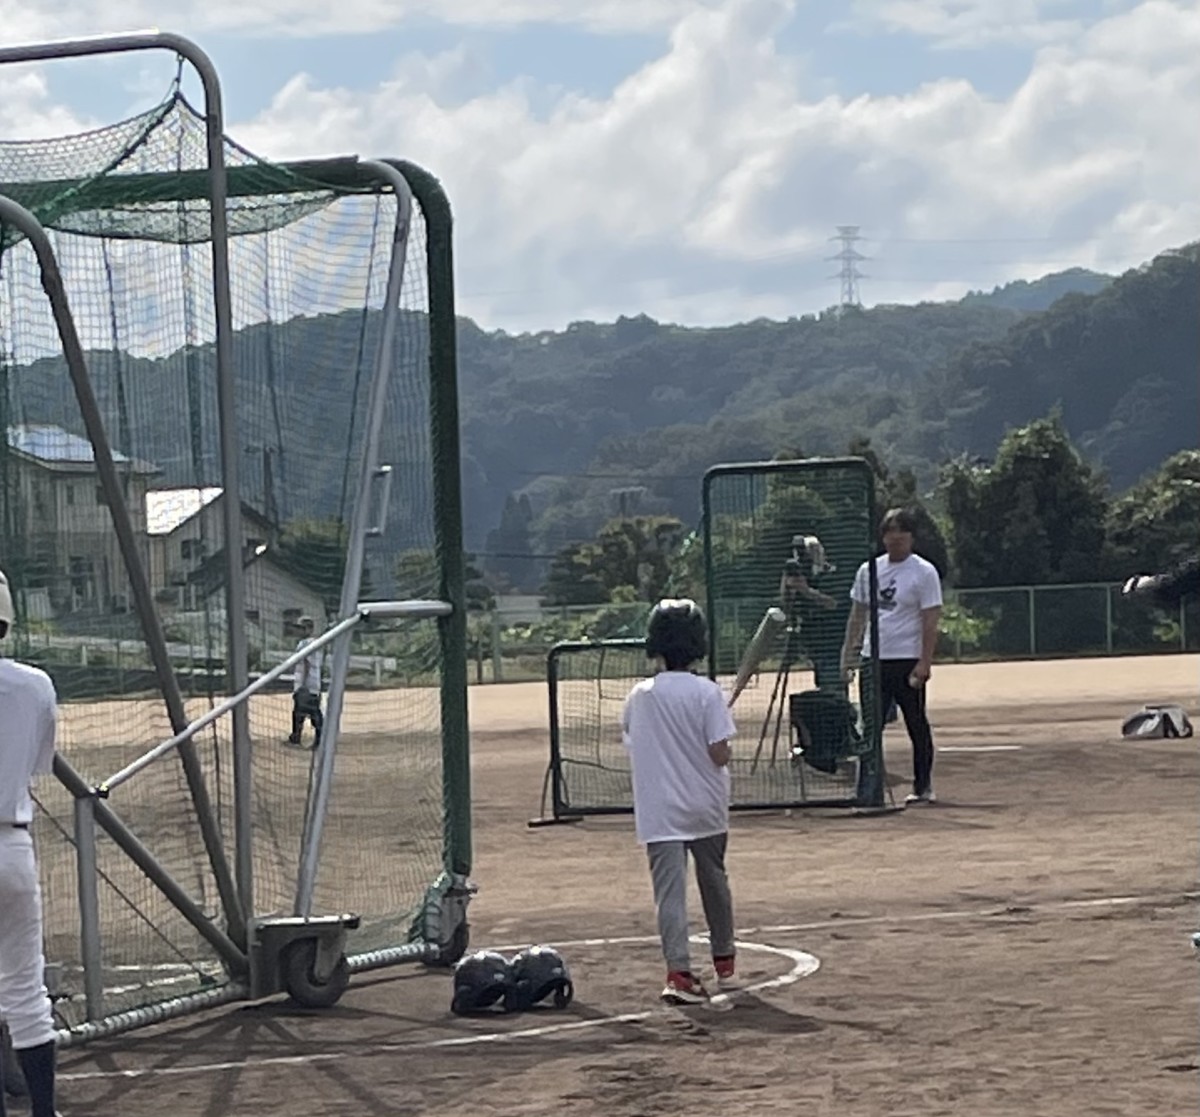 Hideki Matsui pitches to kids at his baseball clinic in Nomi, Japan.